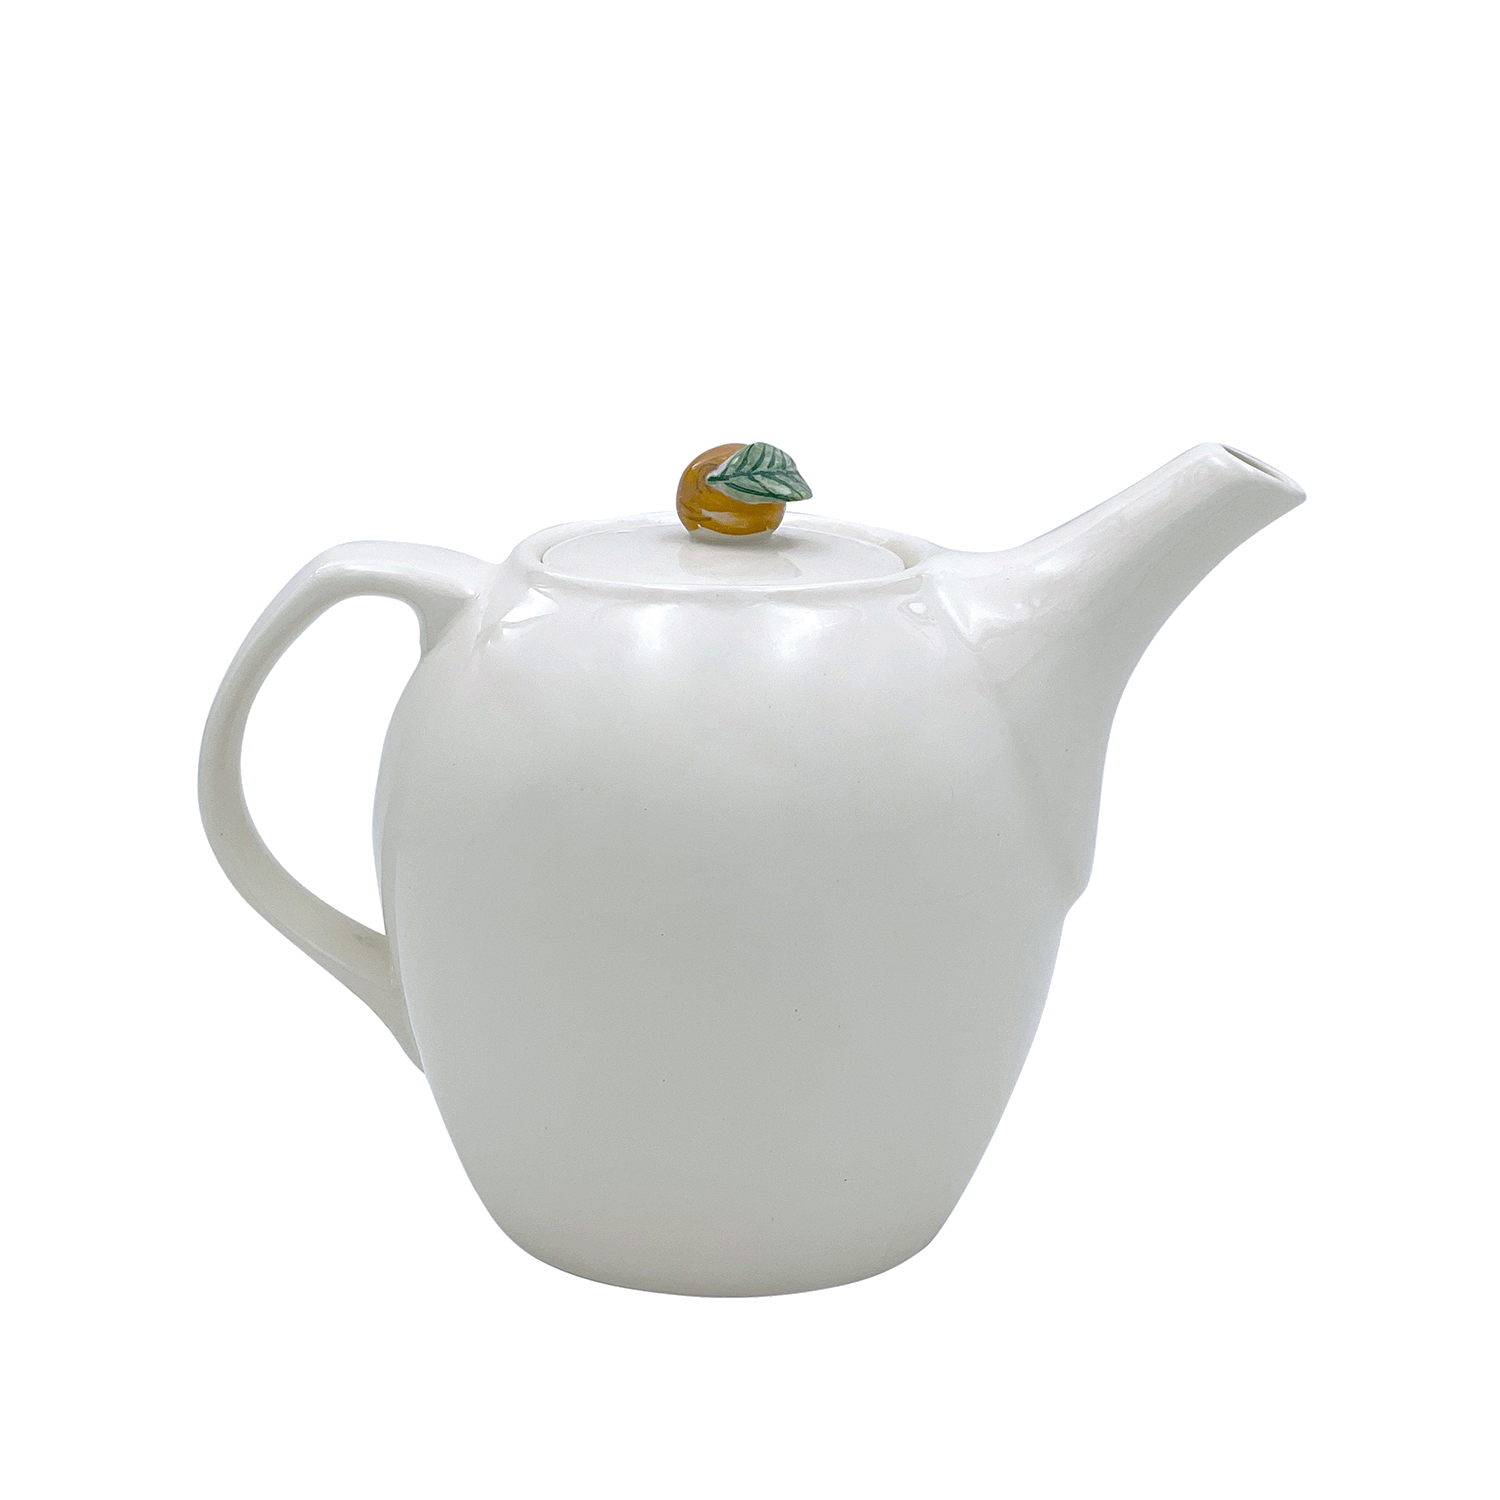 Cream Teapot with Orange